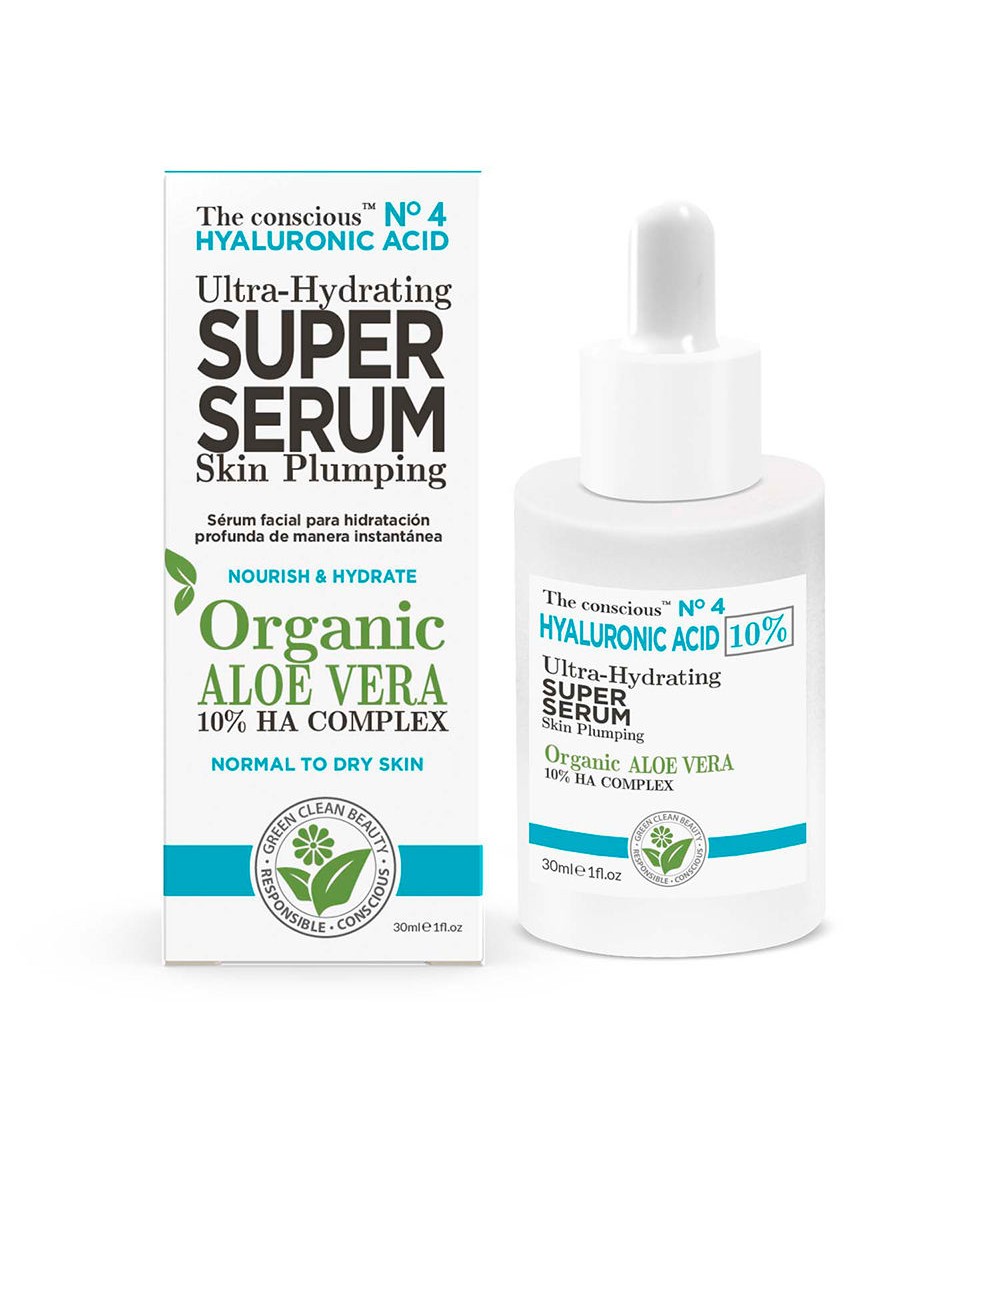 HYALURONIC ACID ultra-hydrating super serum organic aloe vera 30 ml